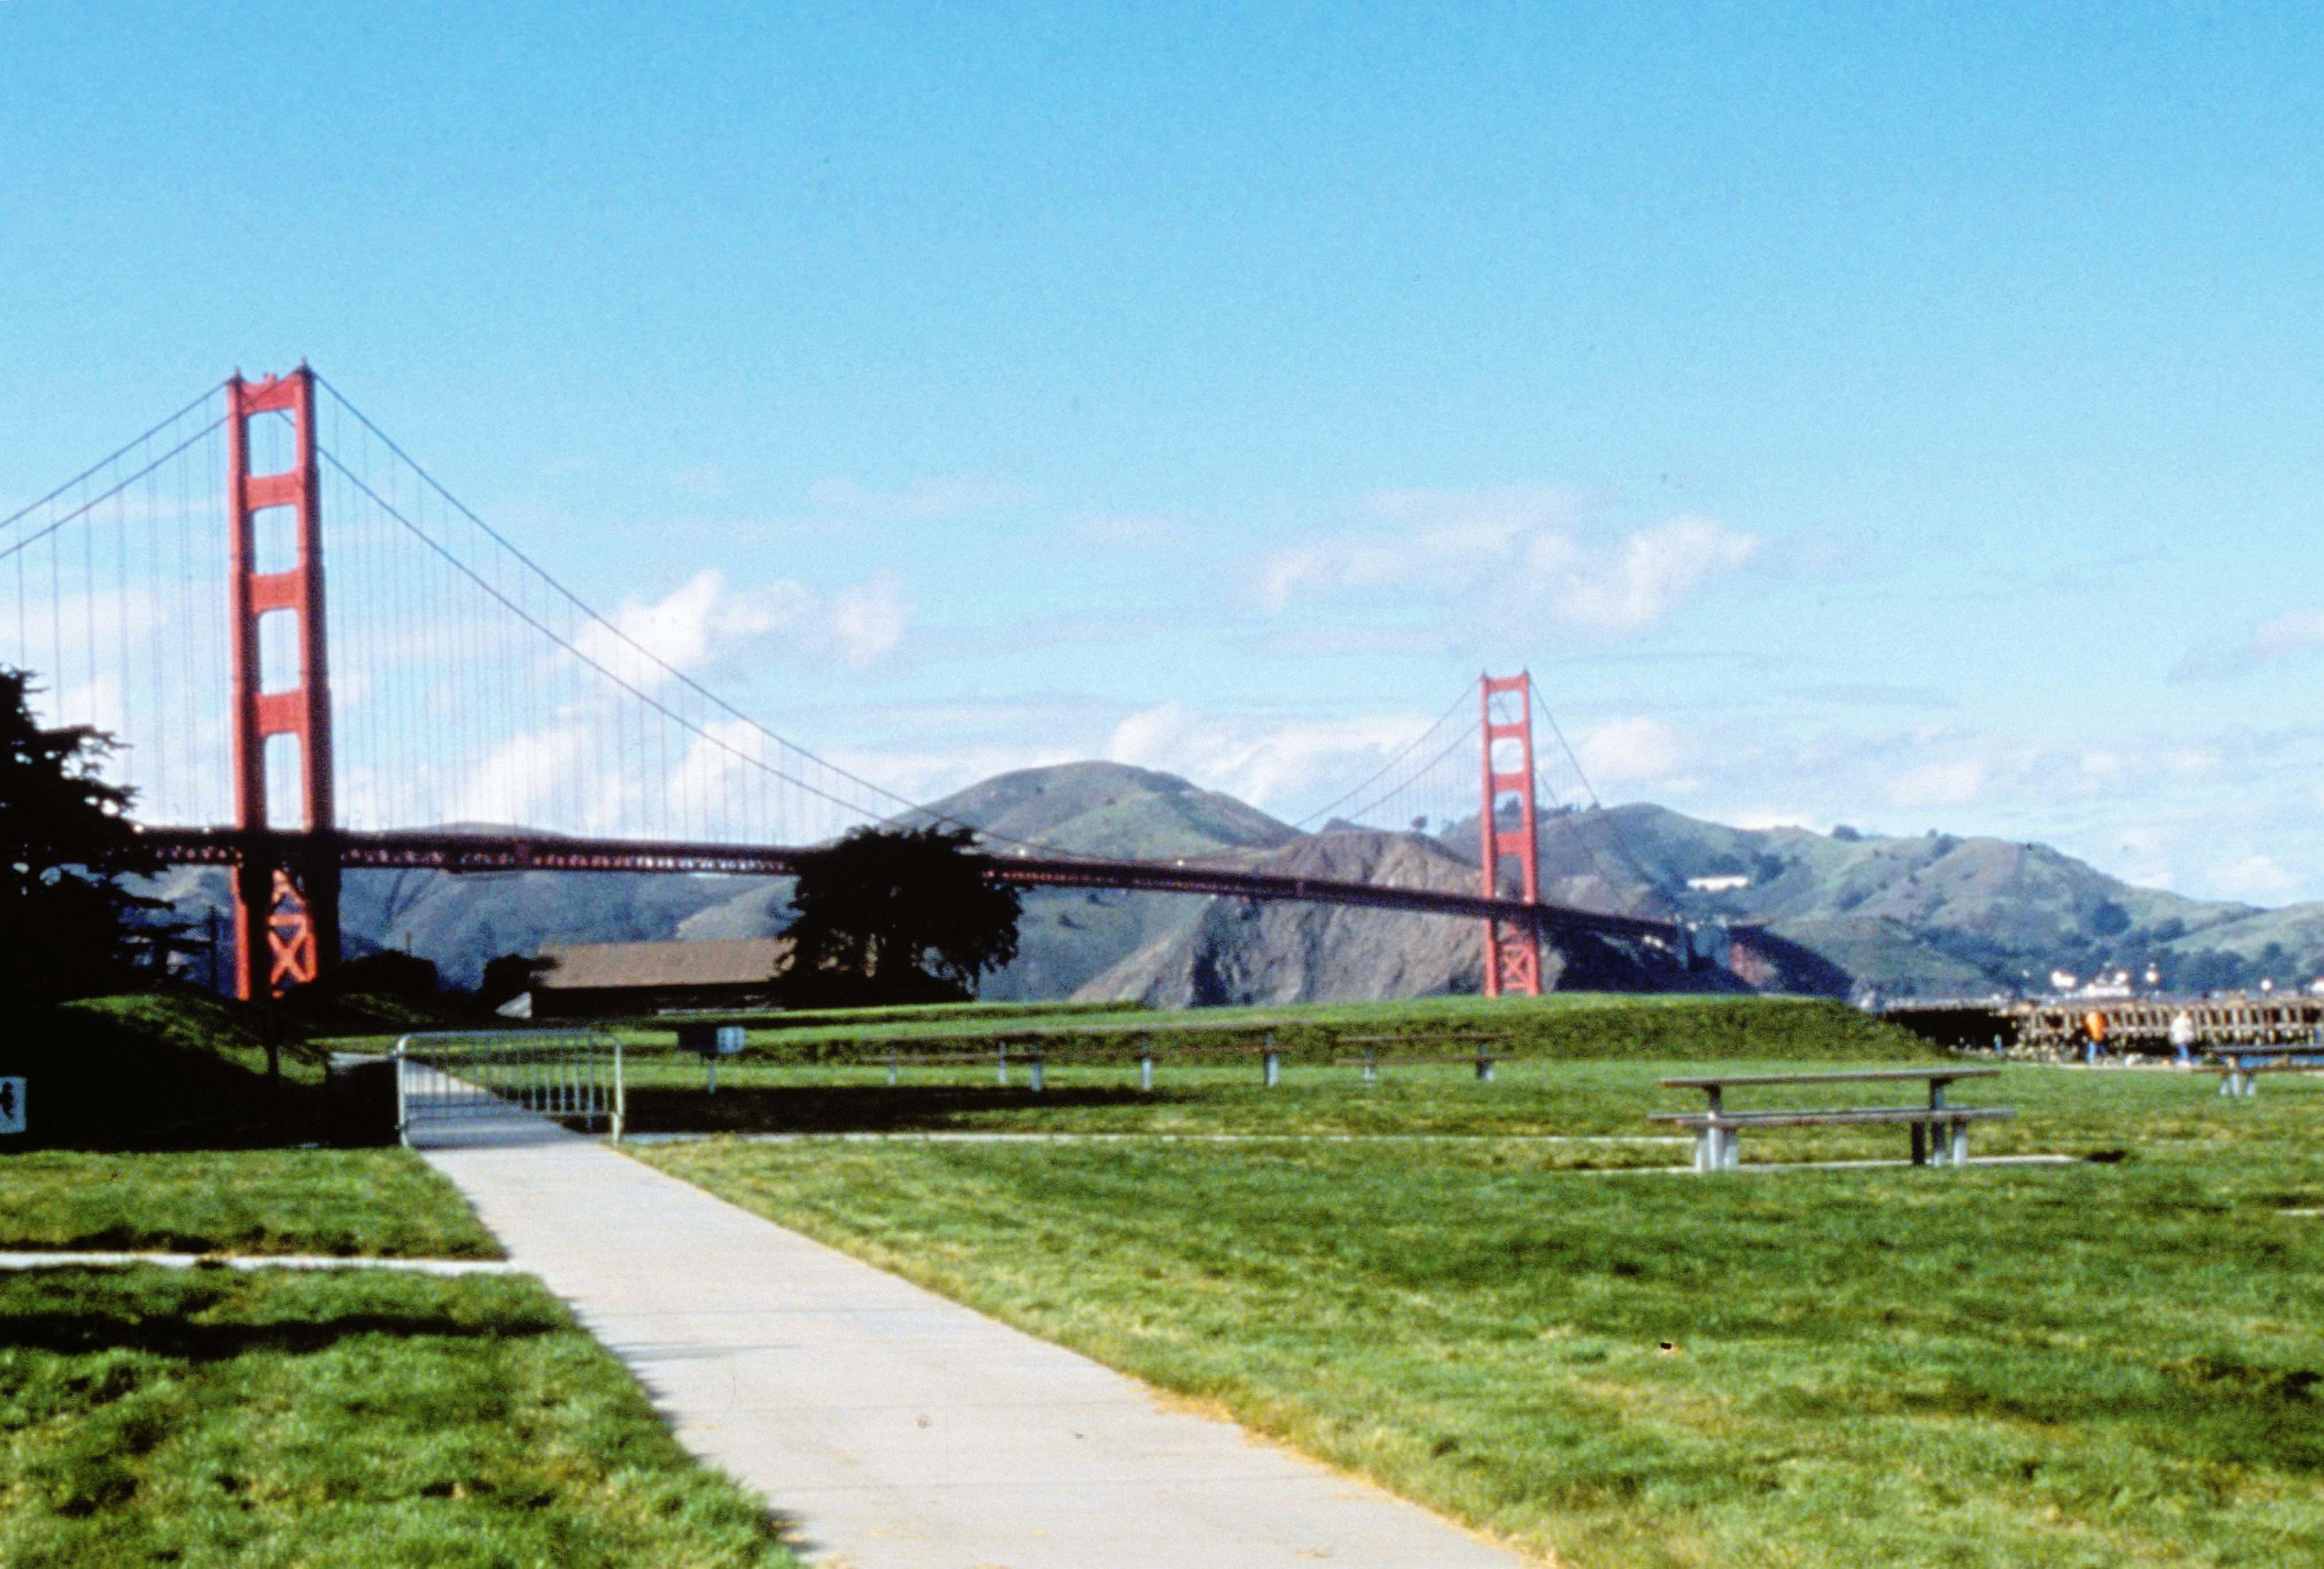 Crissy Field of San Francisco